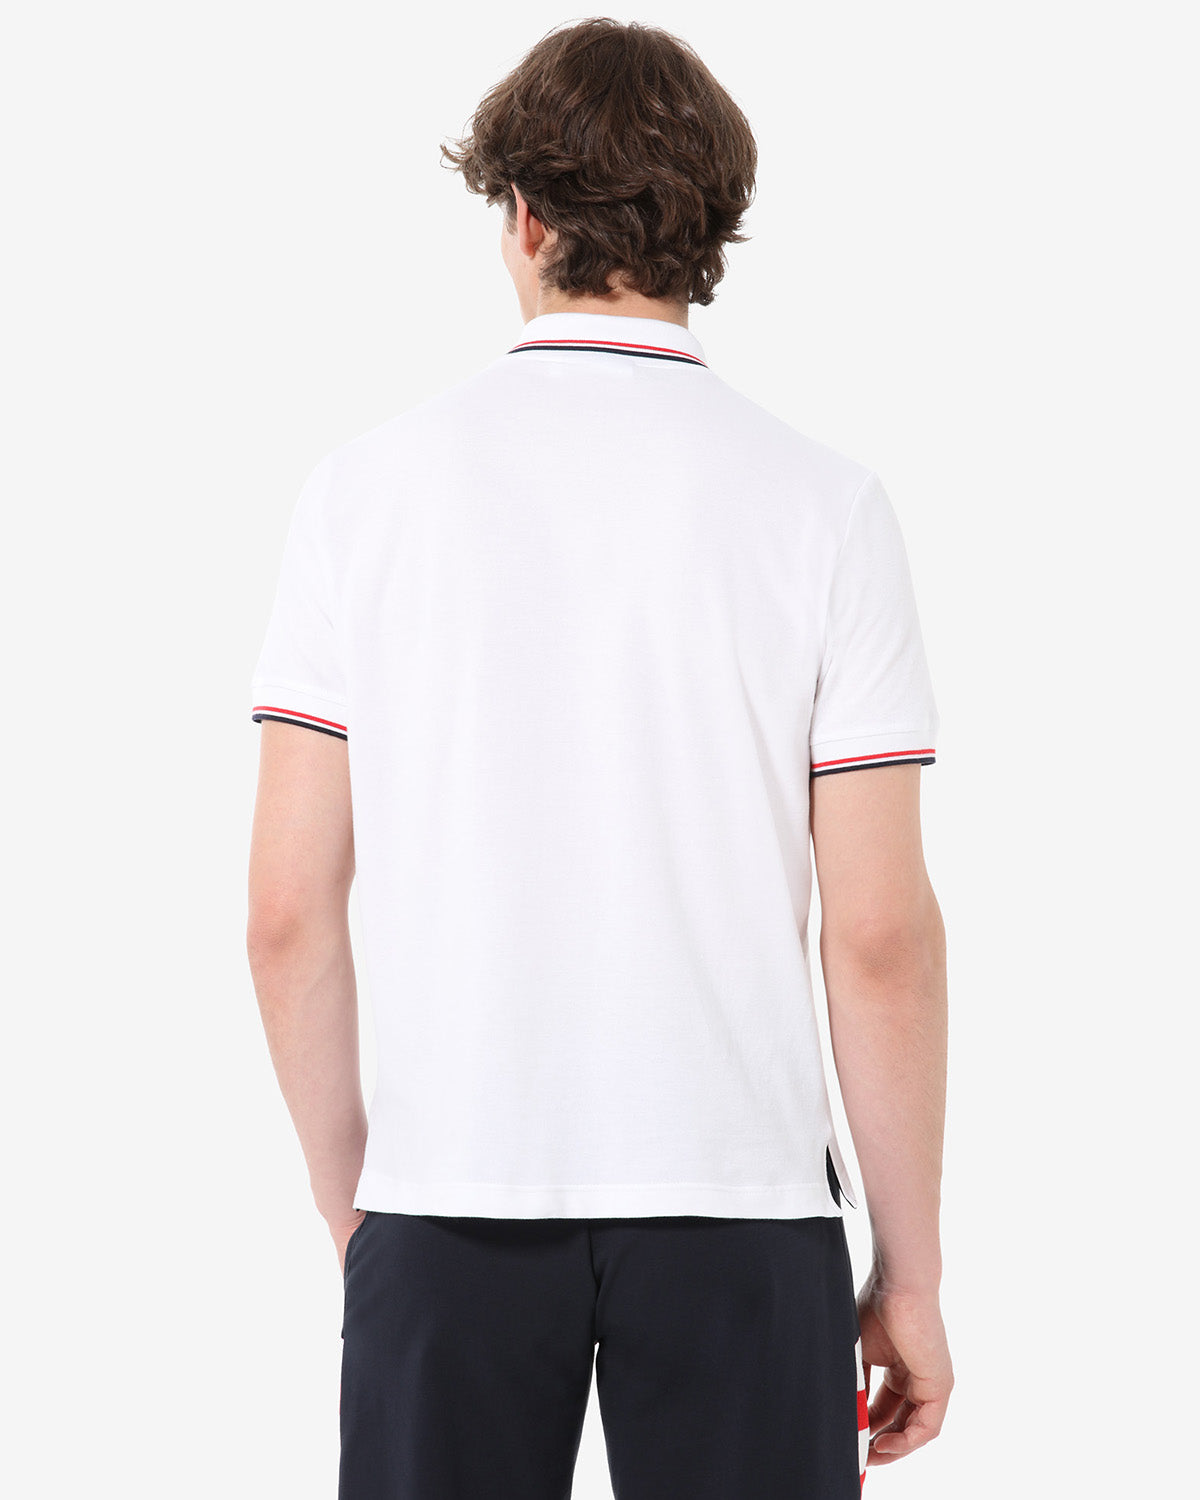 Pocket Pique Polo Shirt: Australian Sportswear